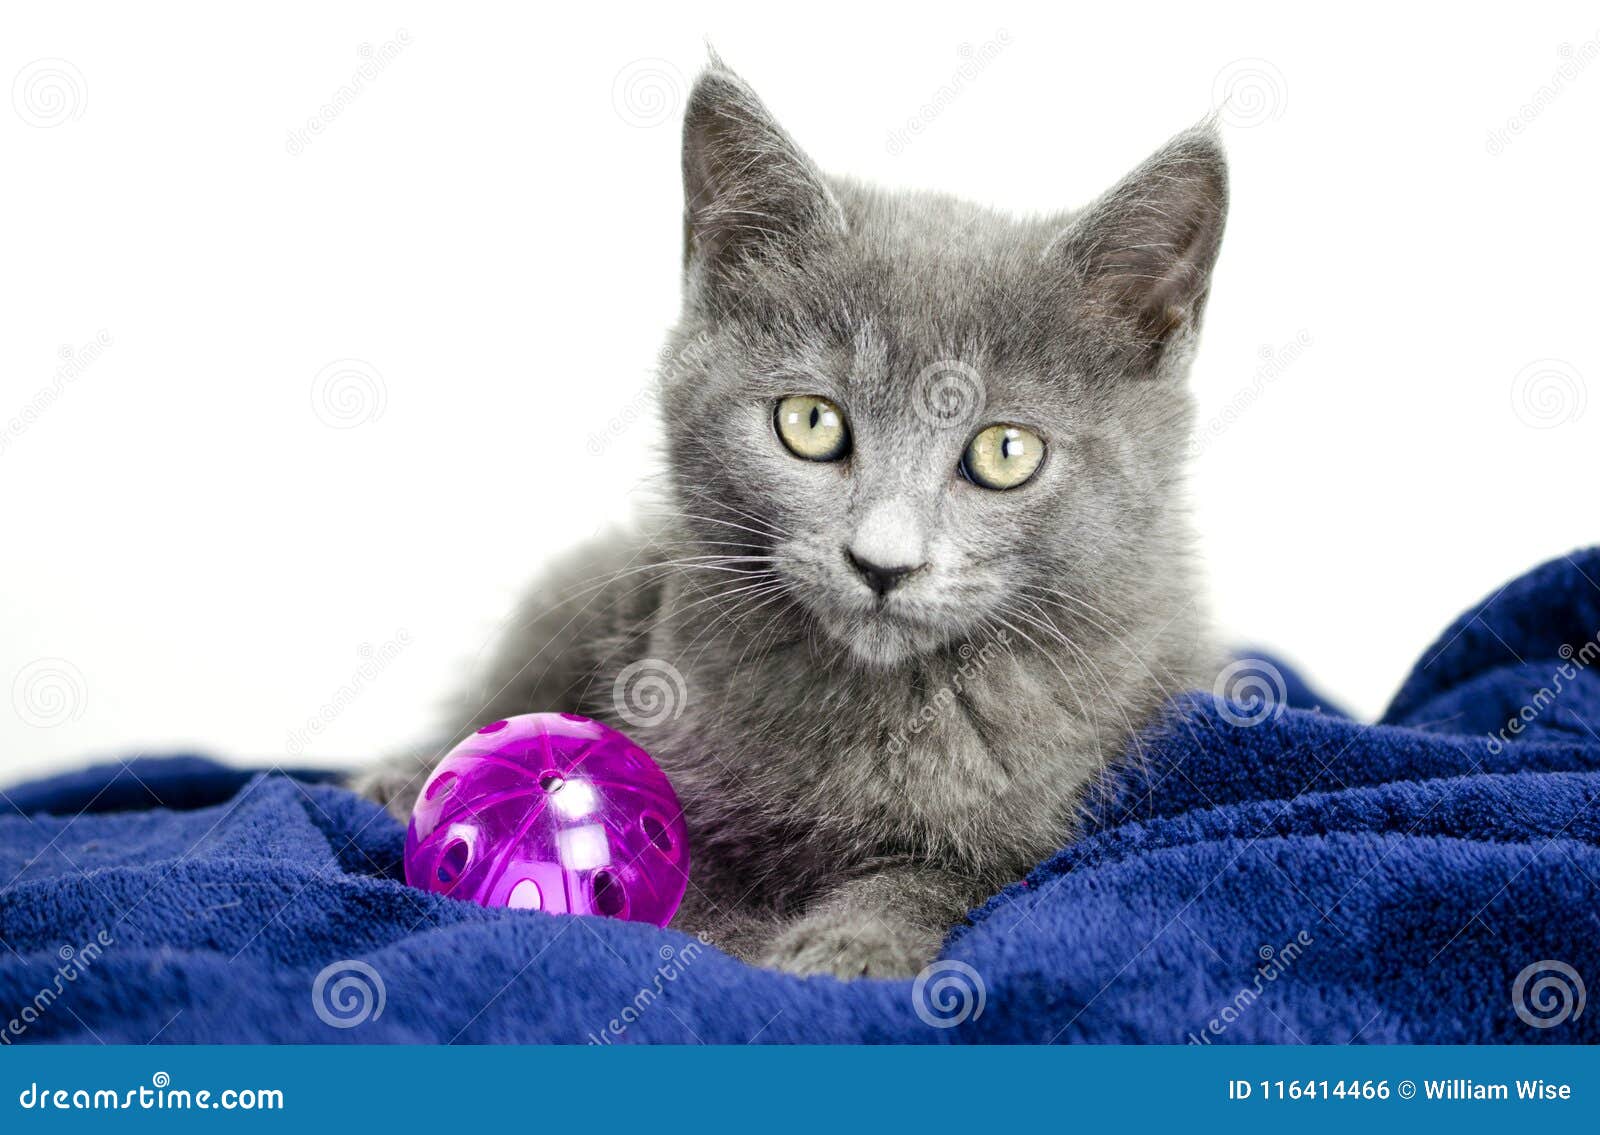 Smoke Gray Kitten With Cat Toy Animal Shelter Adoption Photo Stock Photo Image Of Male Society 116414466